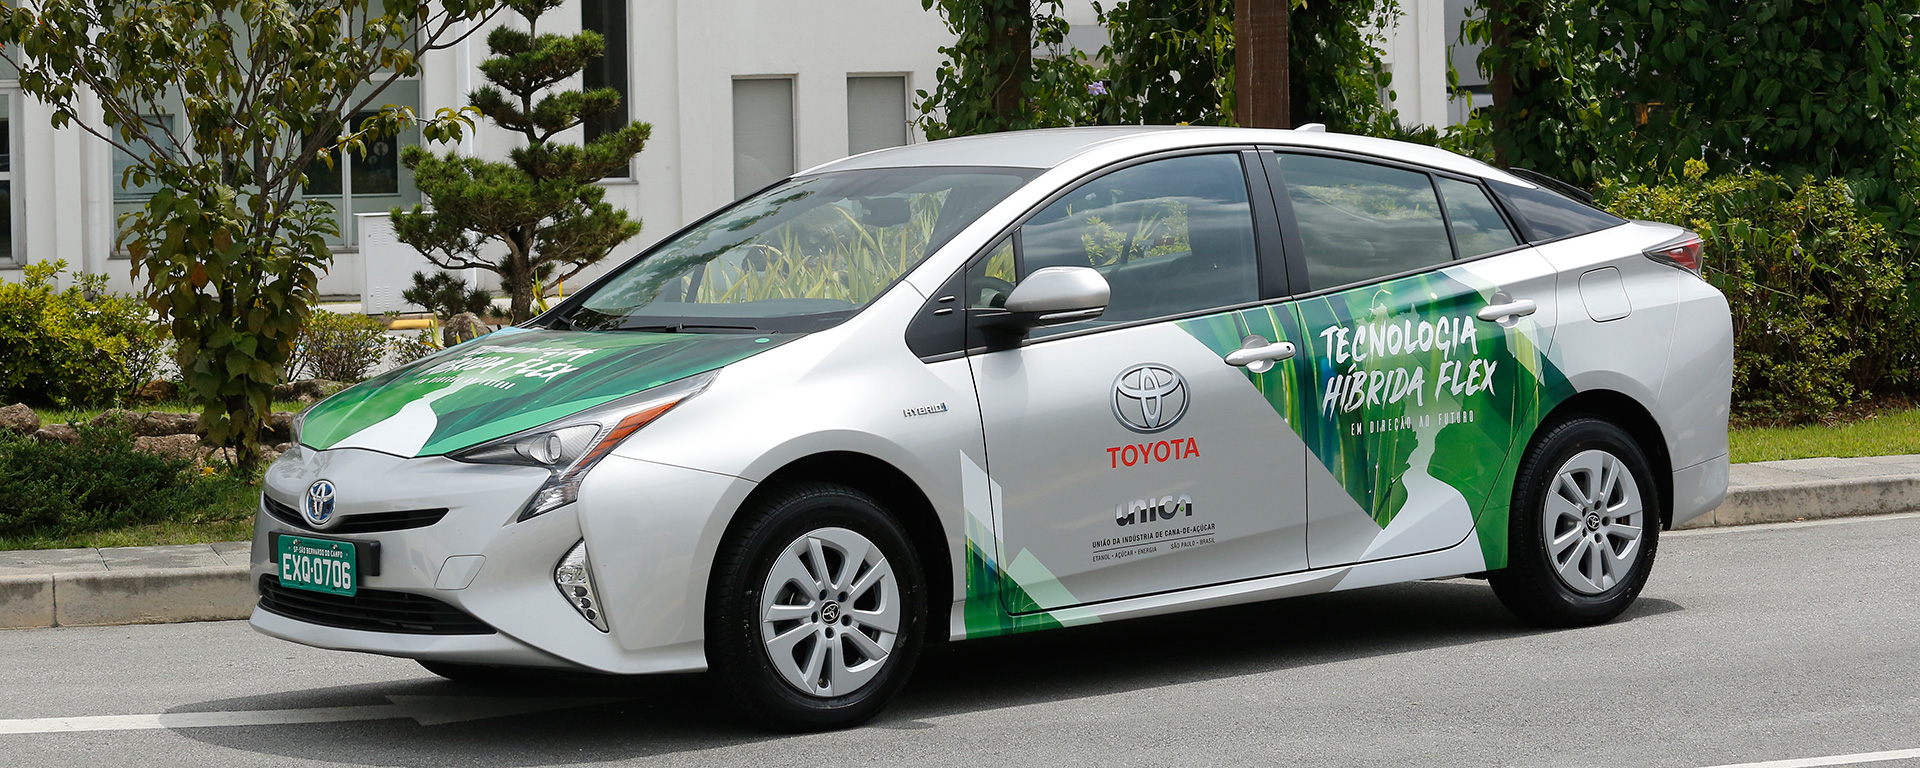 Toyota Reveals World-First Flexible Fuel Hybrid Prototype in Brazil